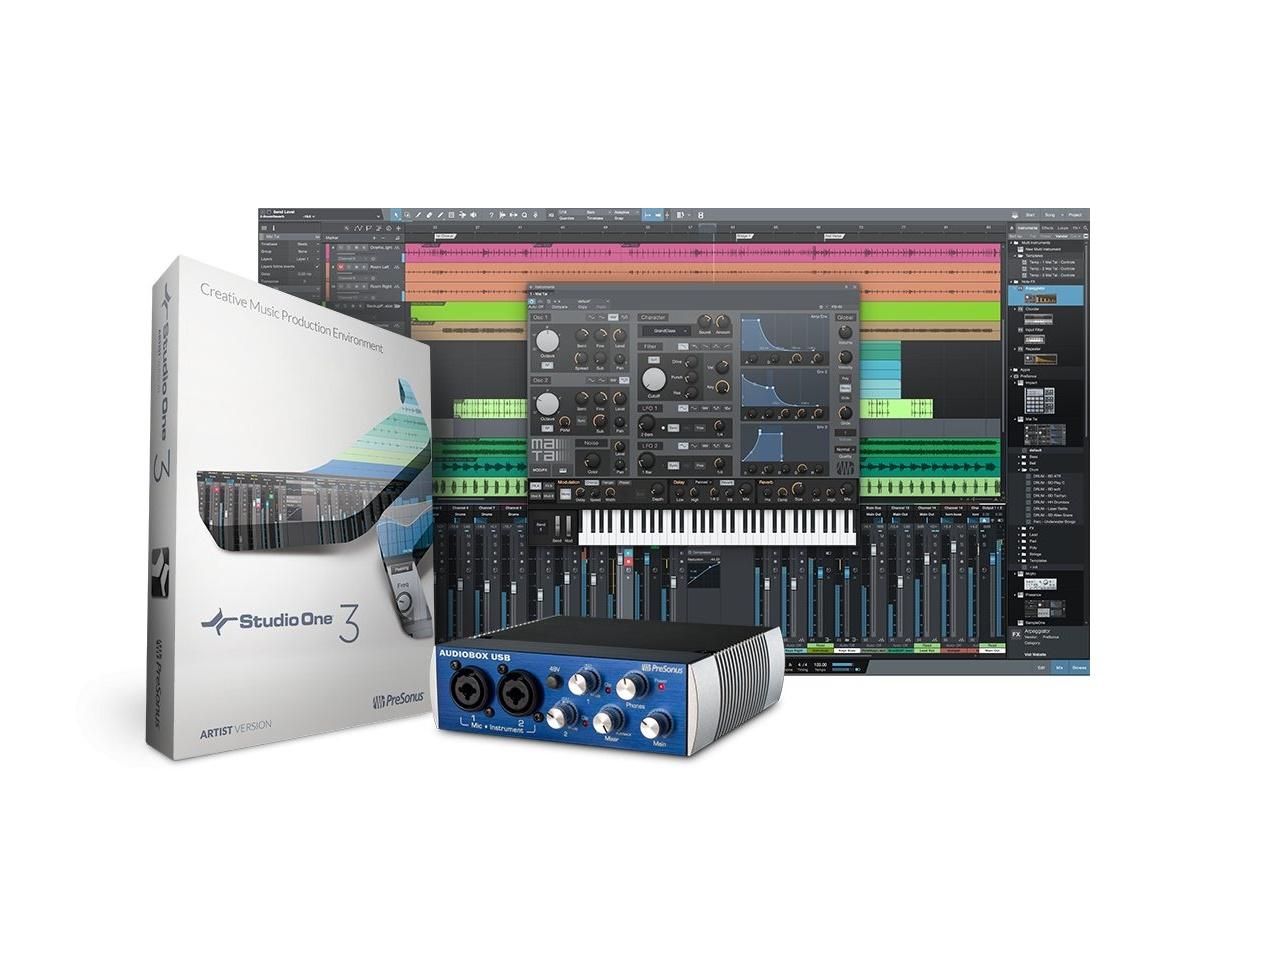 AudioBox USB 2x2 USB 1.1 Recording System/48kHz Audio Interface by PreSonus